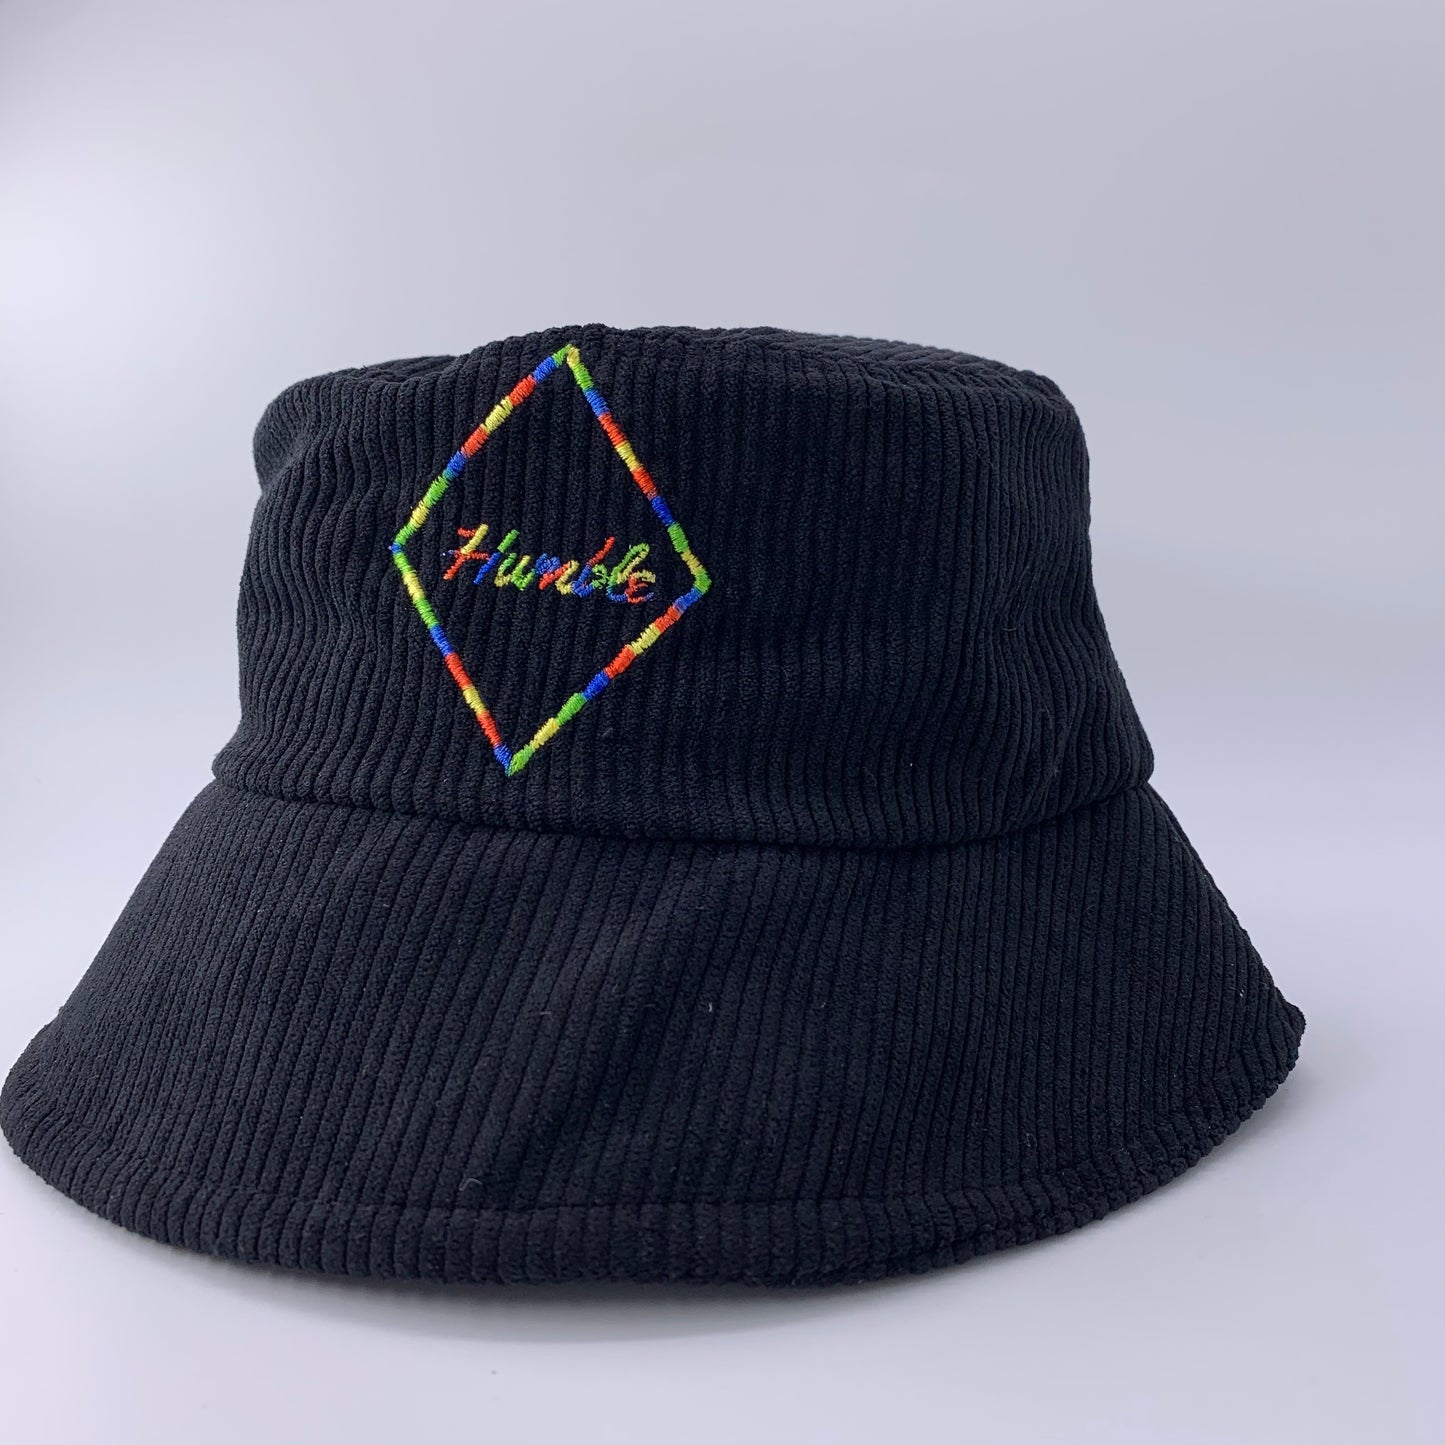 Black Corduroy Humble Hats